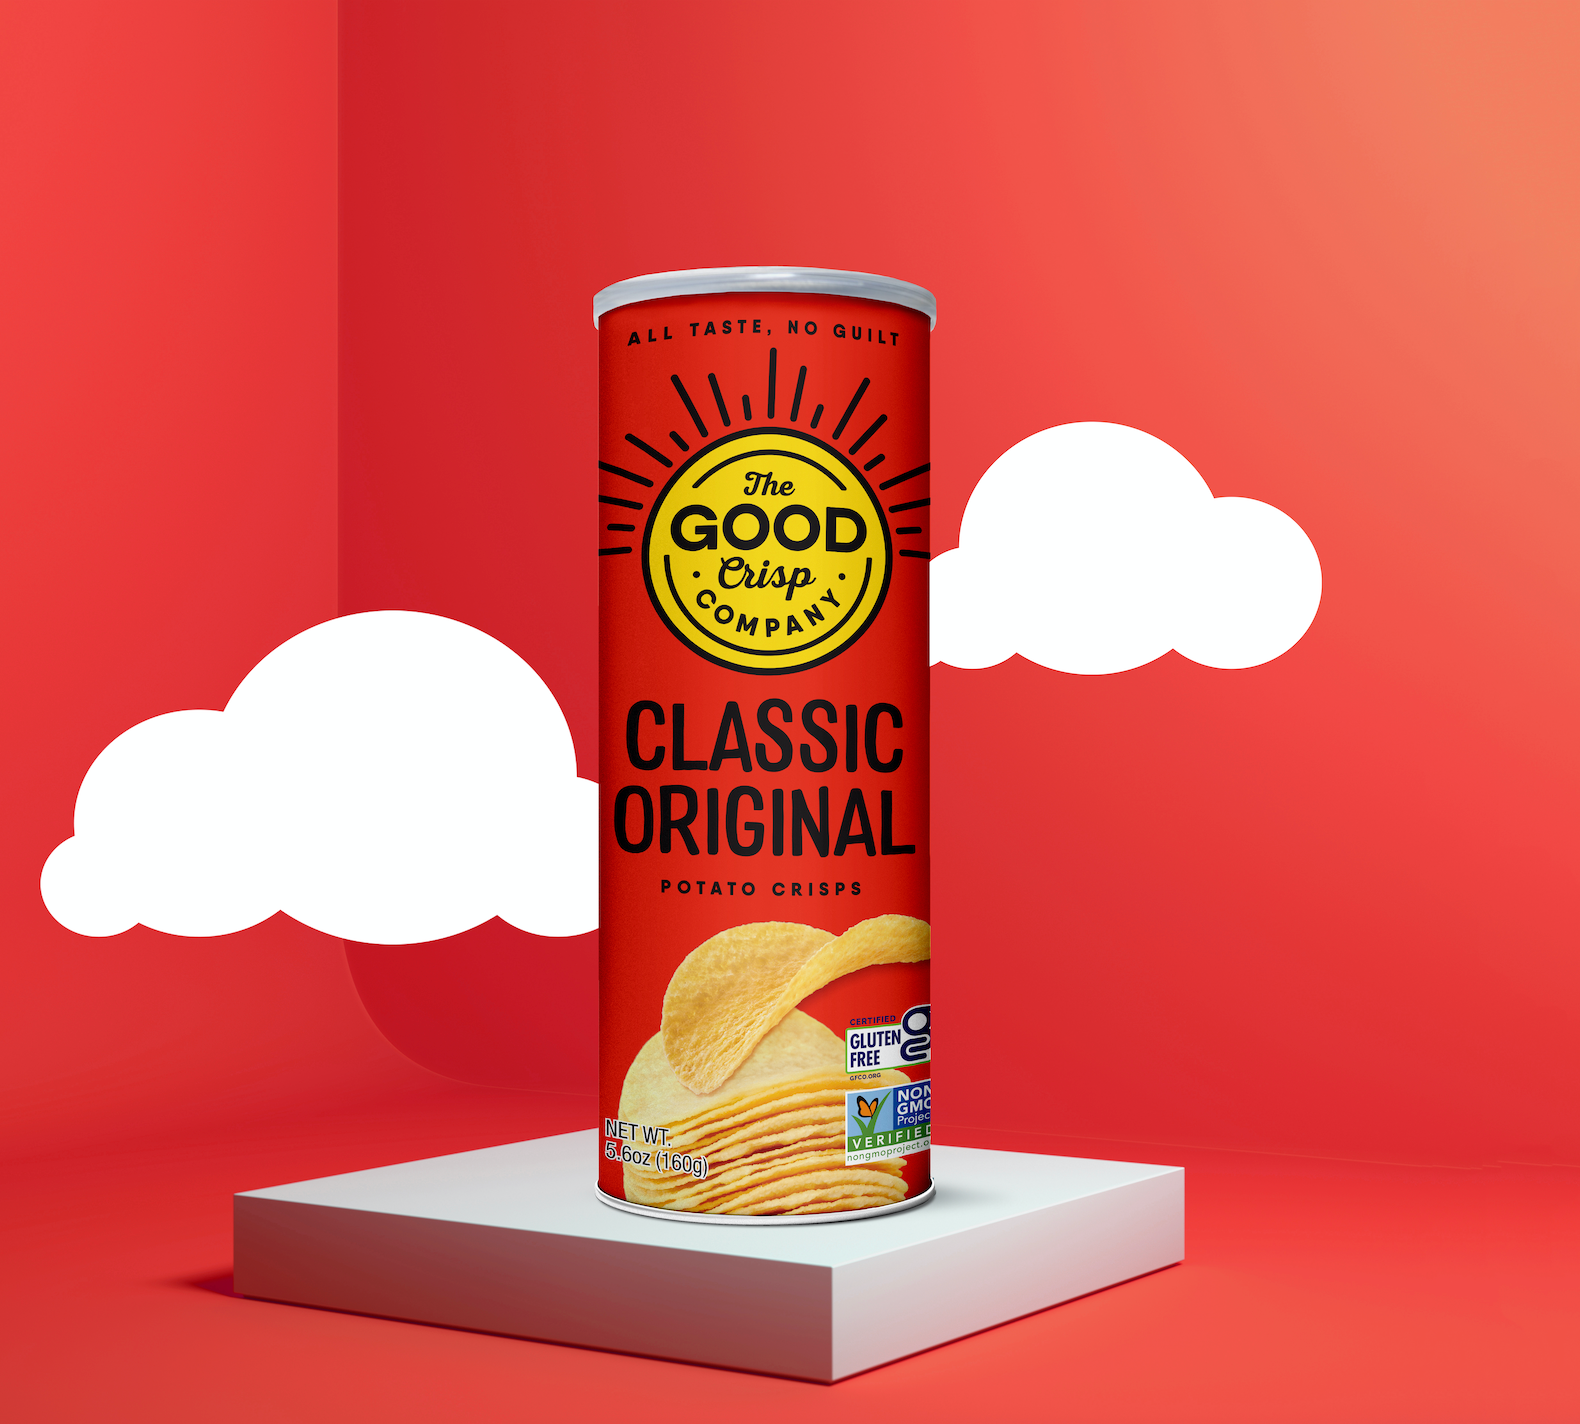 Original Gluten Free Potato Chips (8 Pack) - The Good Crisp Company